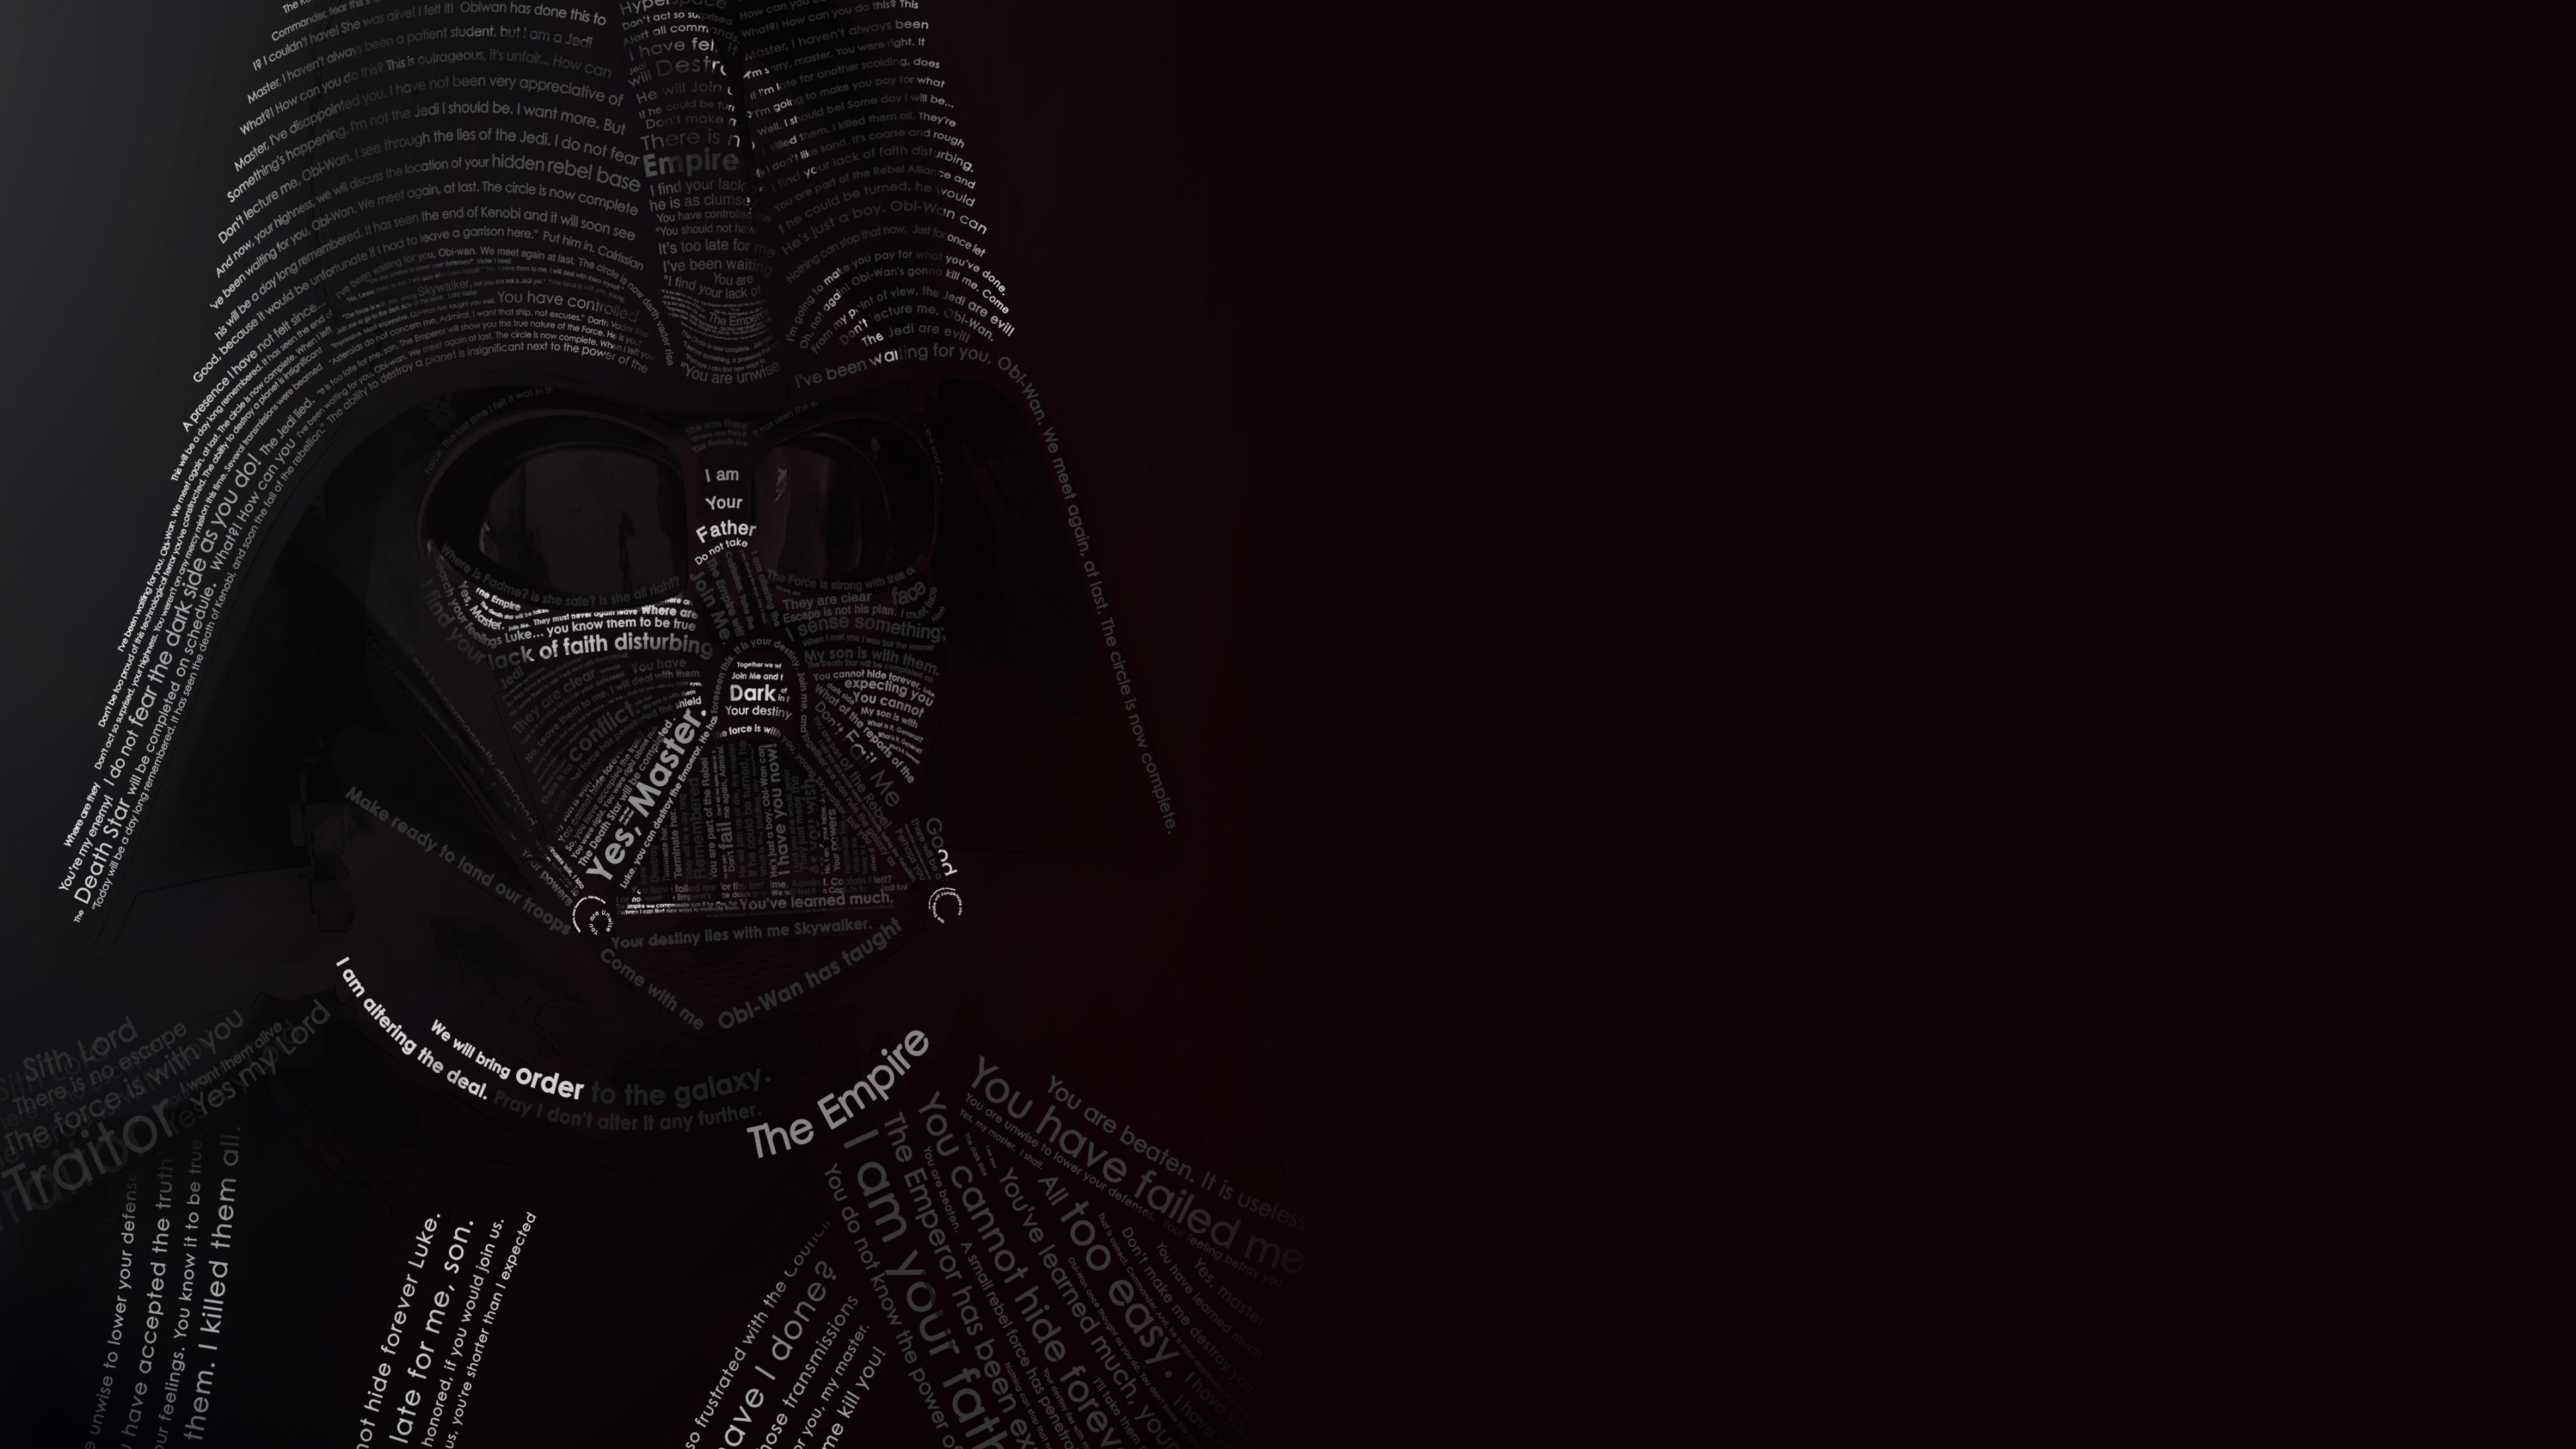 Darth Vader Typographic Portrait Wallpaper for Desktop 4K 3840 x 2160 3840x2160